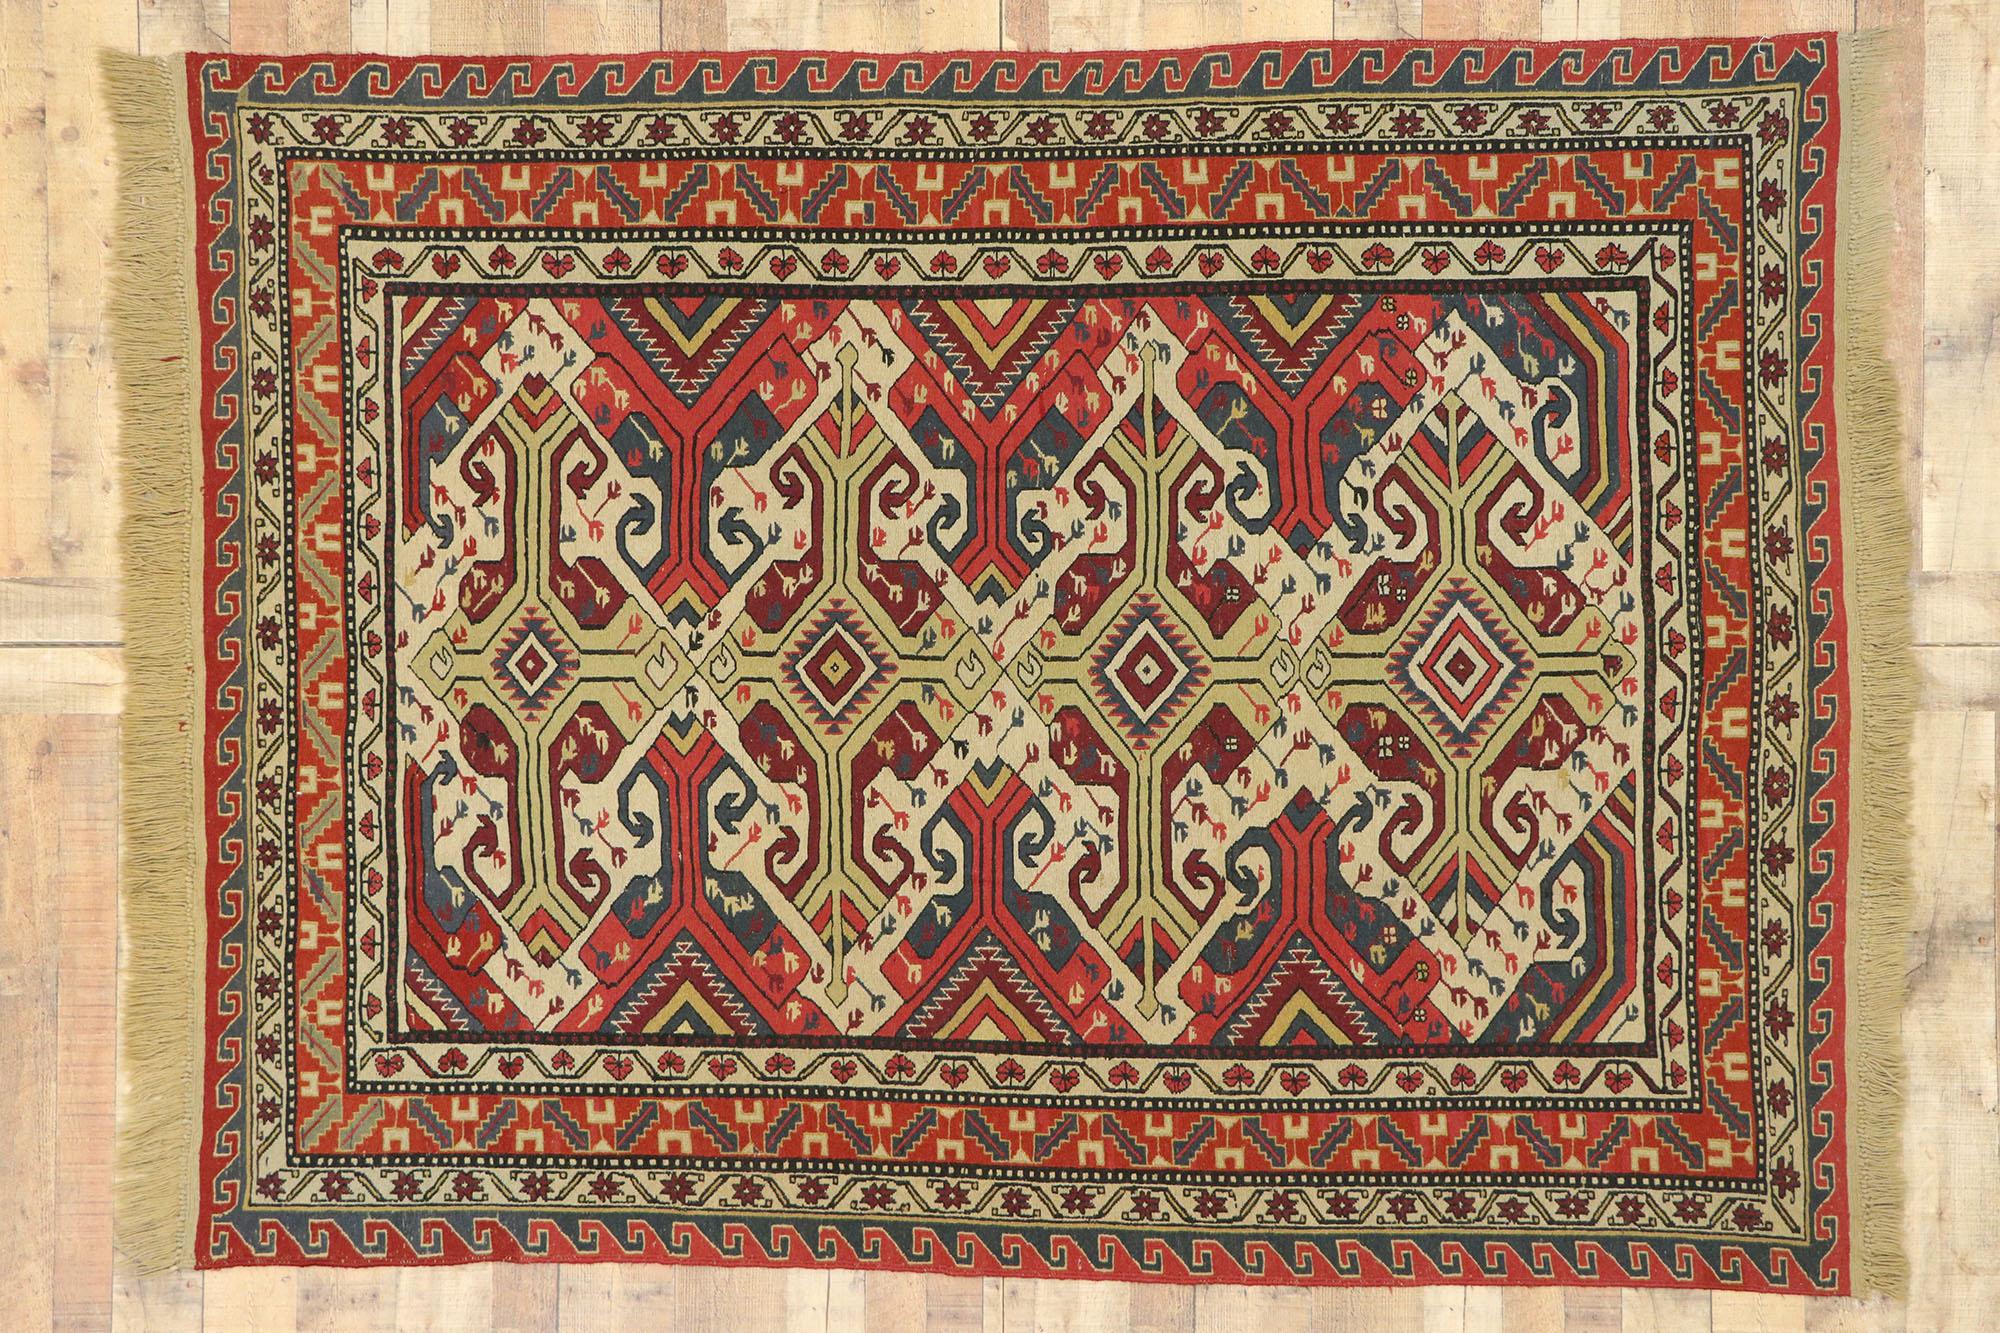 20th Century Antique Caucasian Soumak Rug with Rustic Arts & Crafts Style